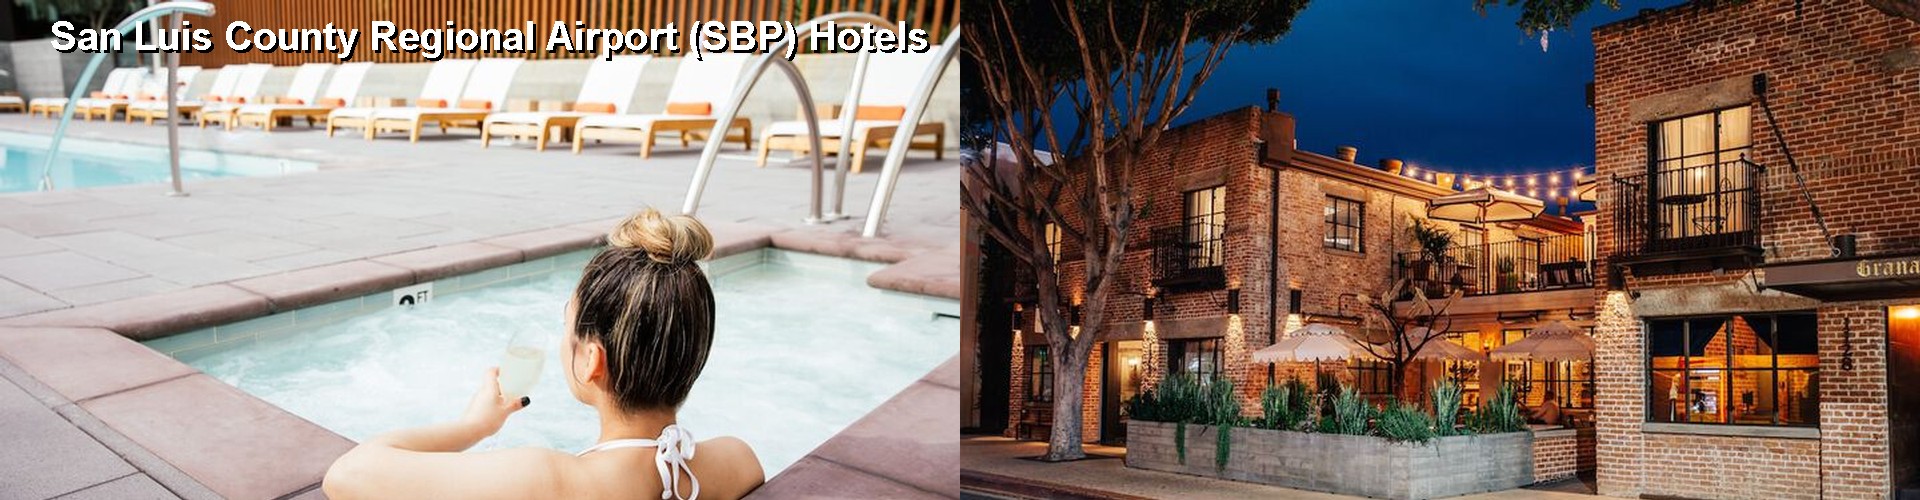 2 Best Hotels near San Luis County Regional Airport (SBP)